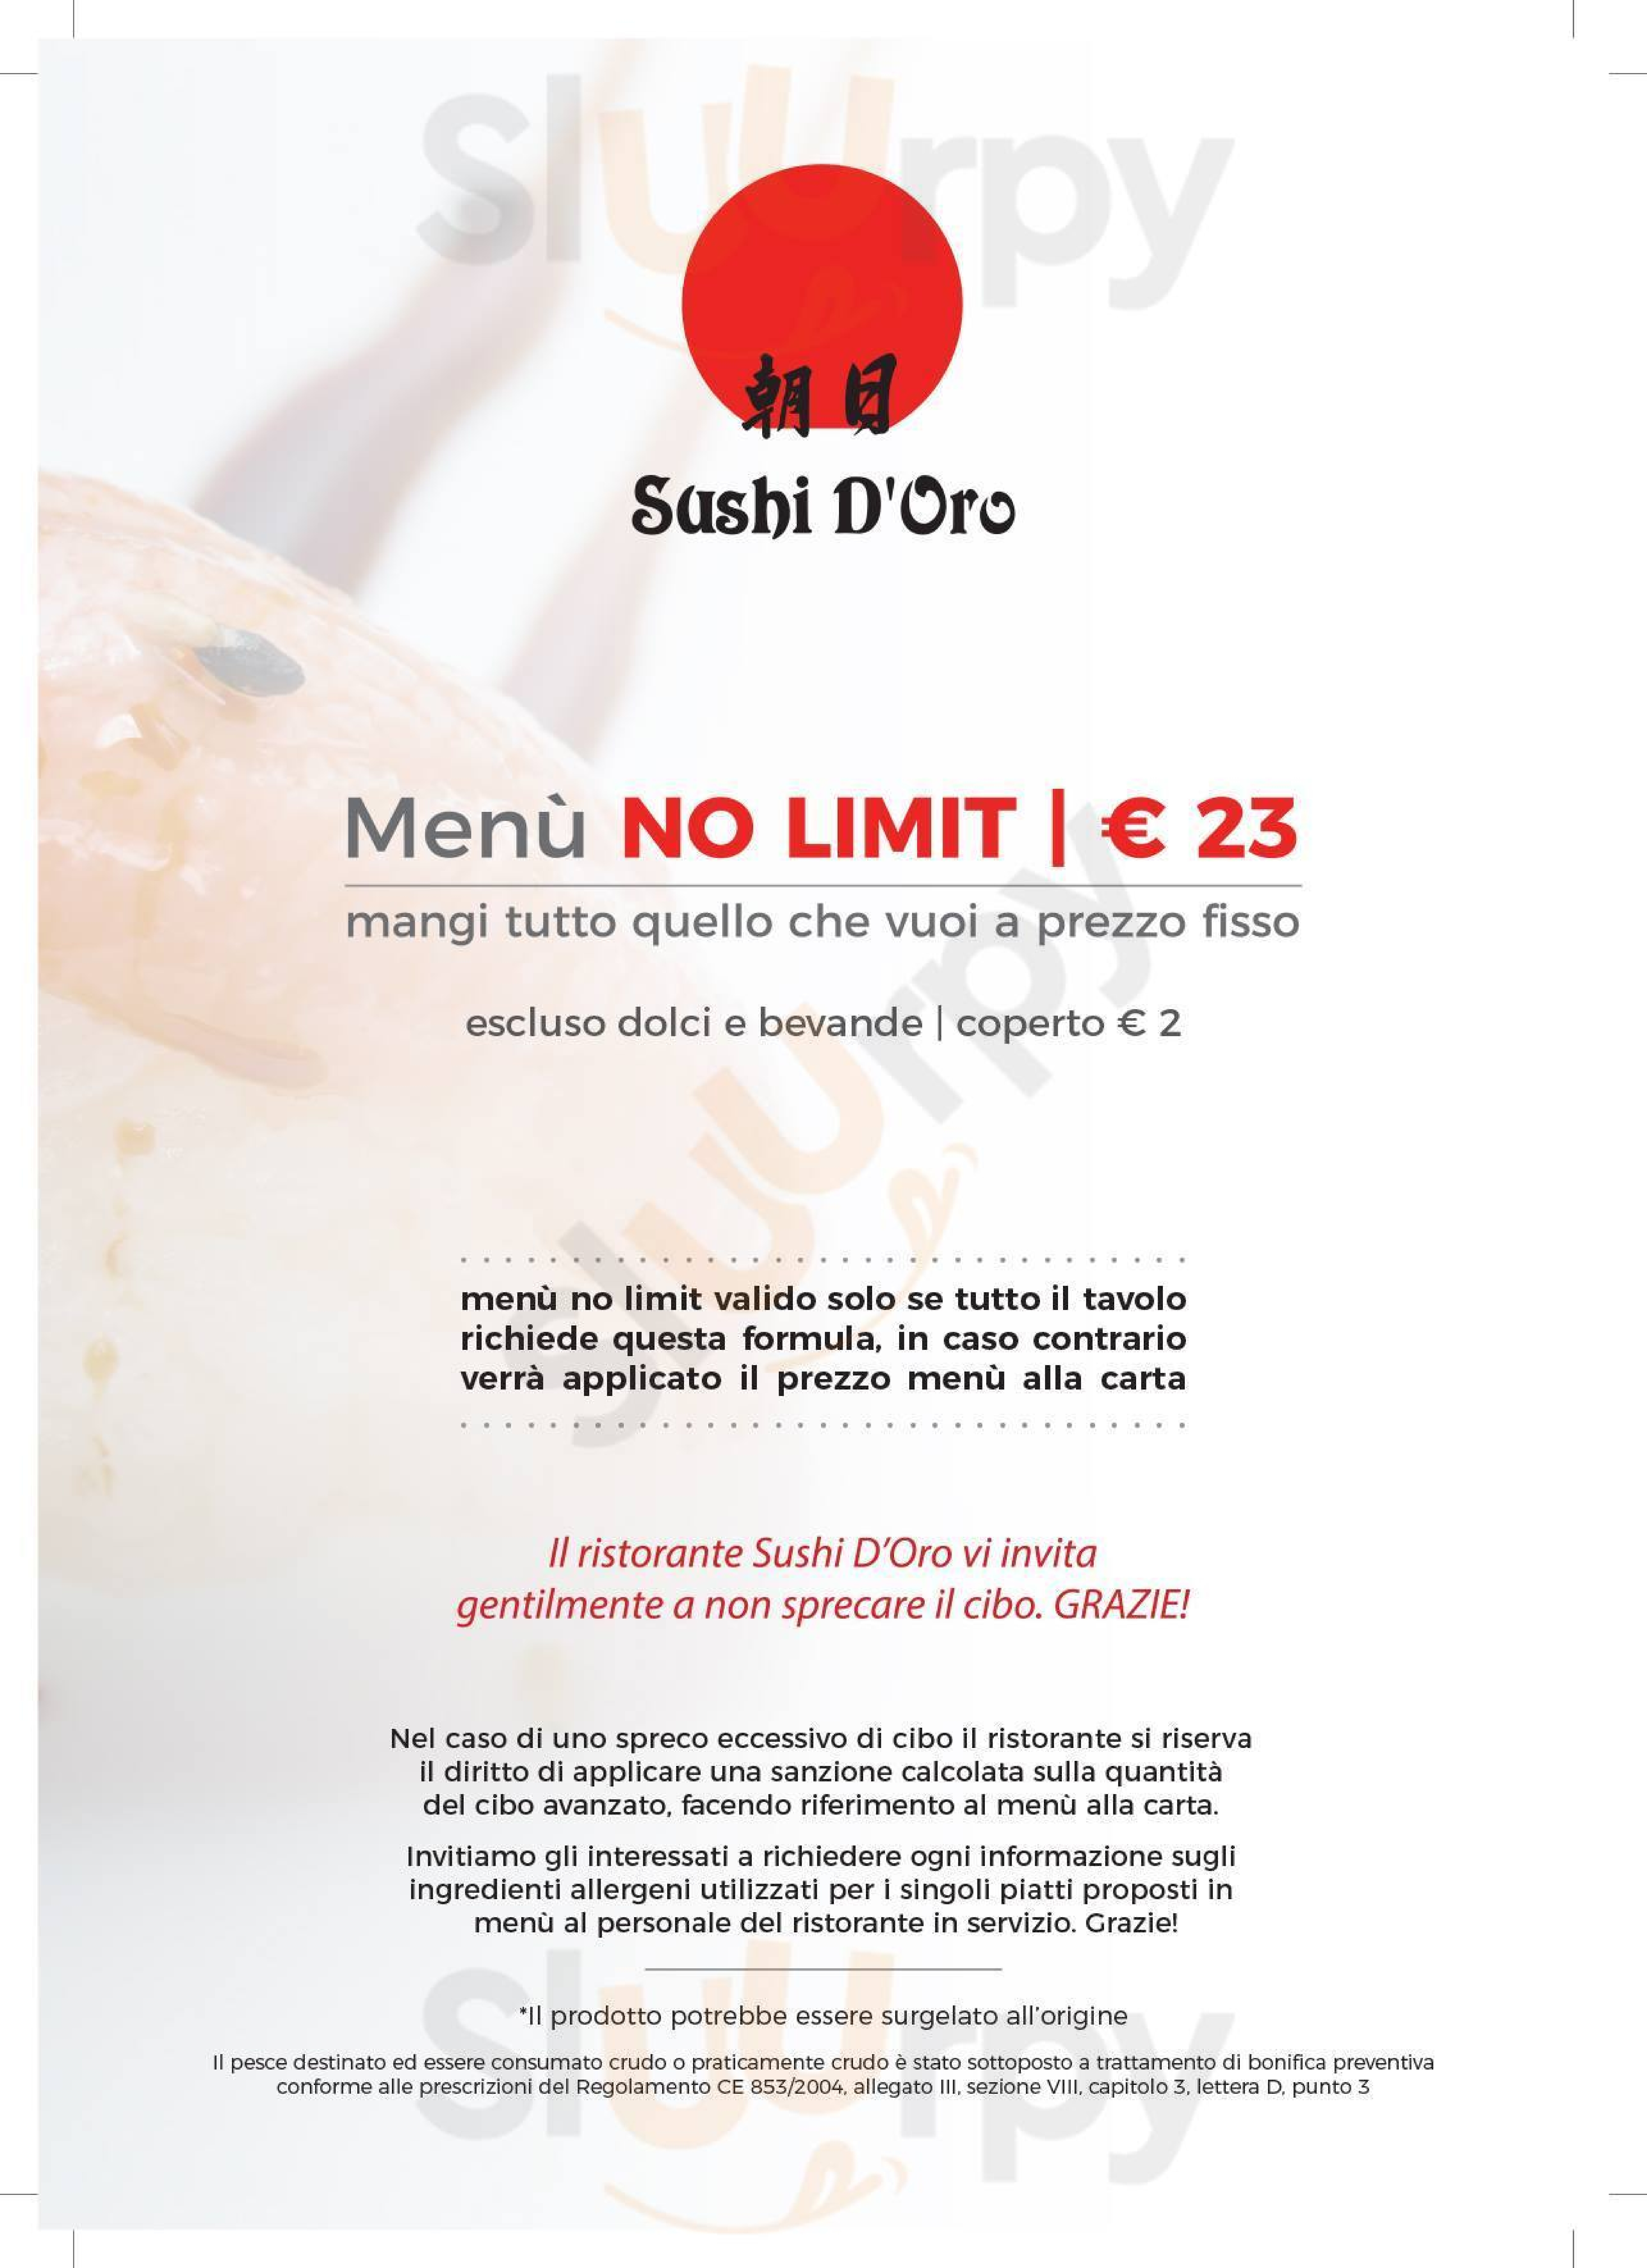 Sushi D'Oro Parma menù 1 pagina